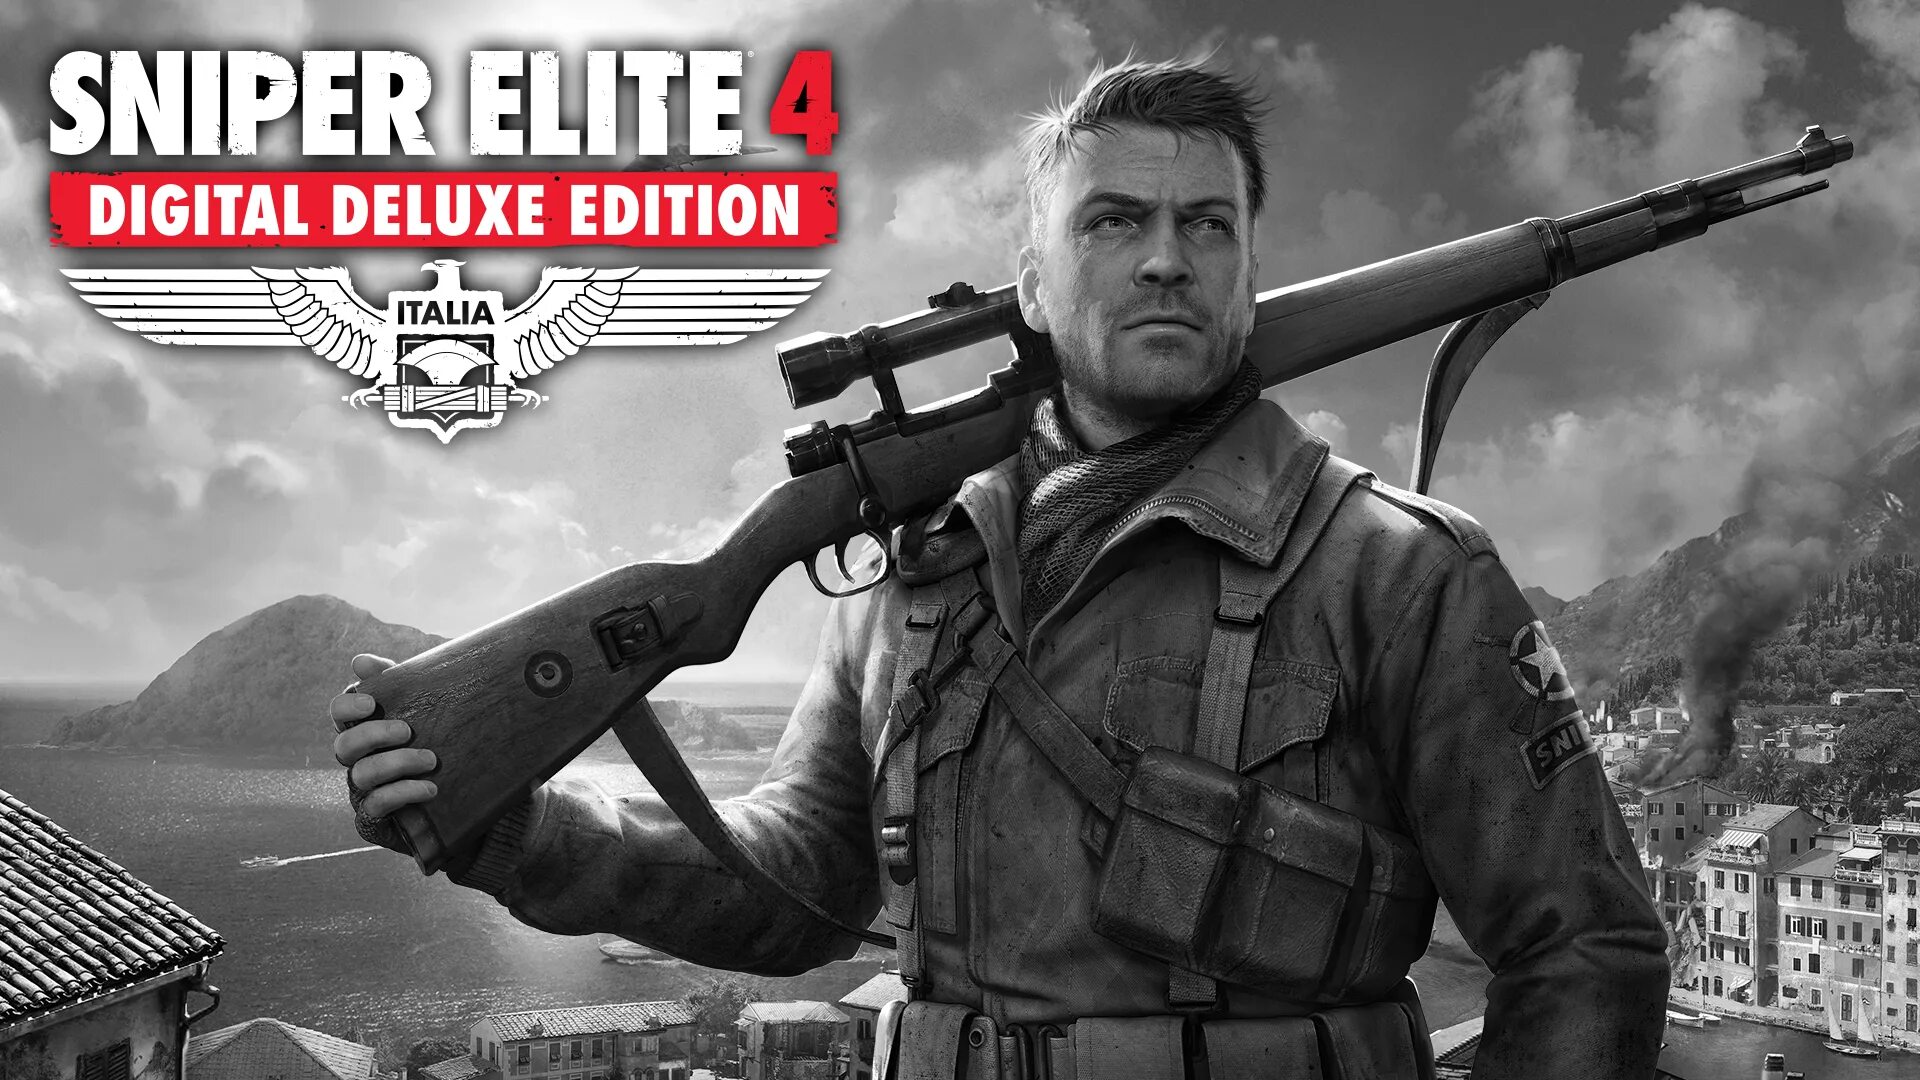 Sniper elite 4 deluxe edition. Sniper Elite 4 Nintendo Switch. Sniper Elite 4 [Switch]. Sniper Elite 4 Digital Deluxe Edition. Sniper Elite 5 (Deluxe Edition) /ps4.